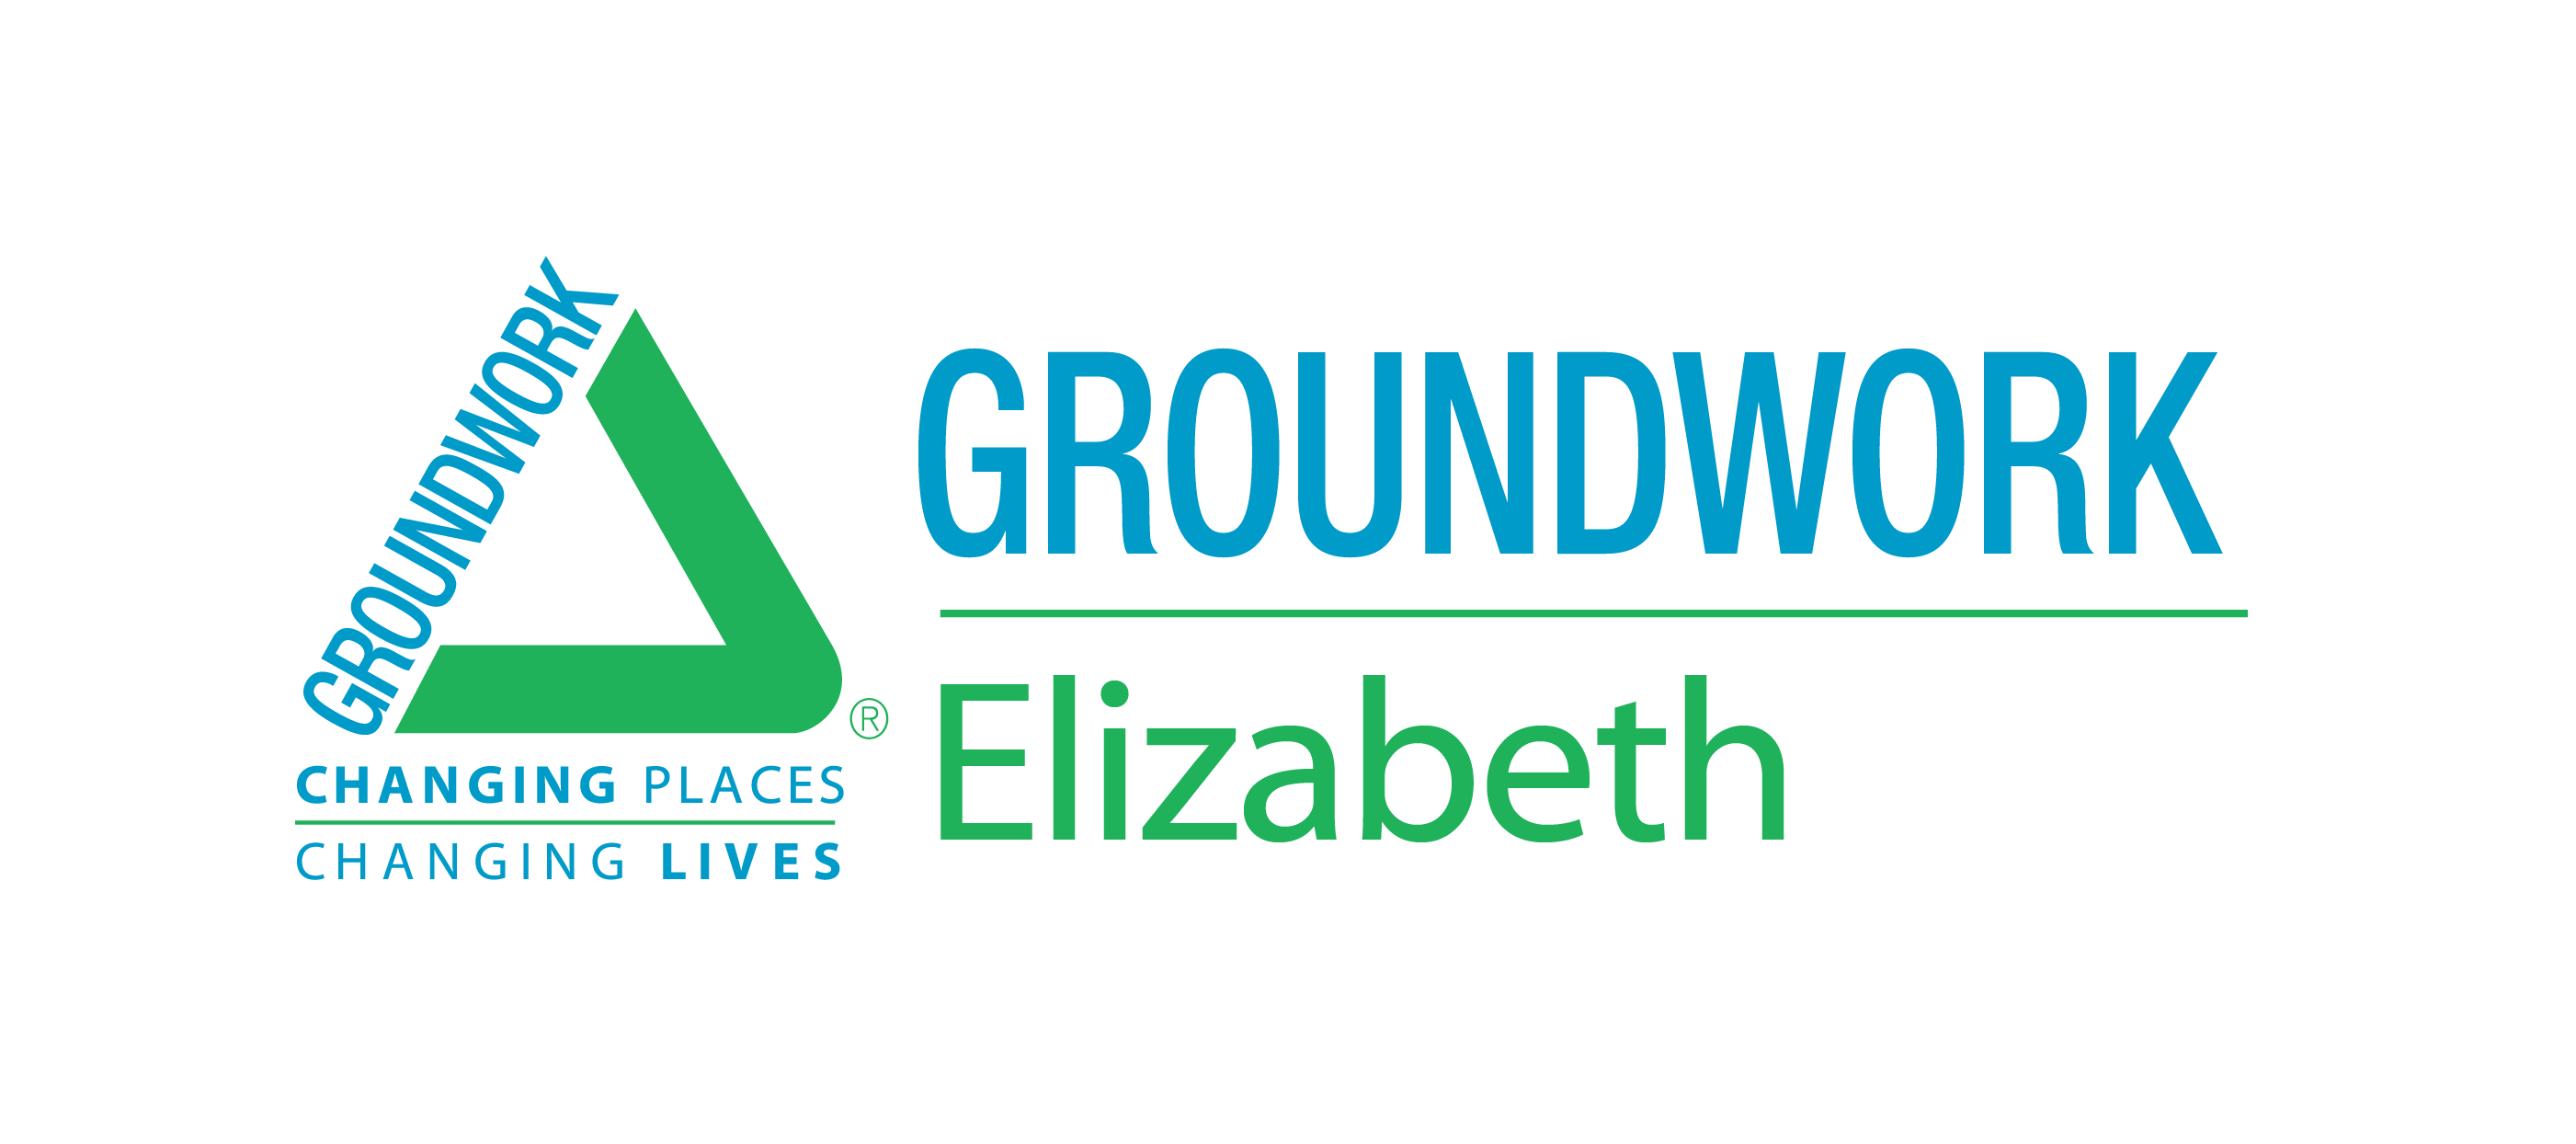 Groundwork Elizabeth River Trail: Revitalizing Community and Environment